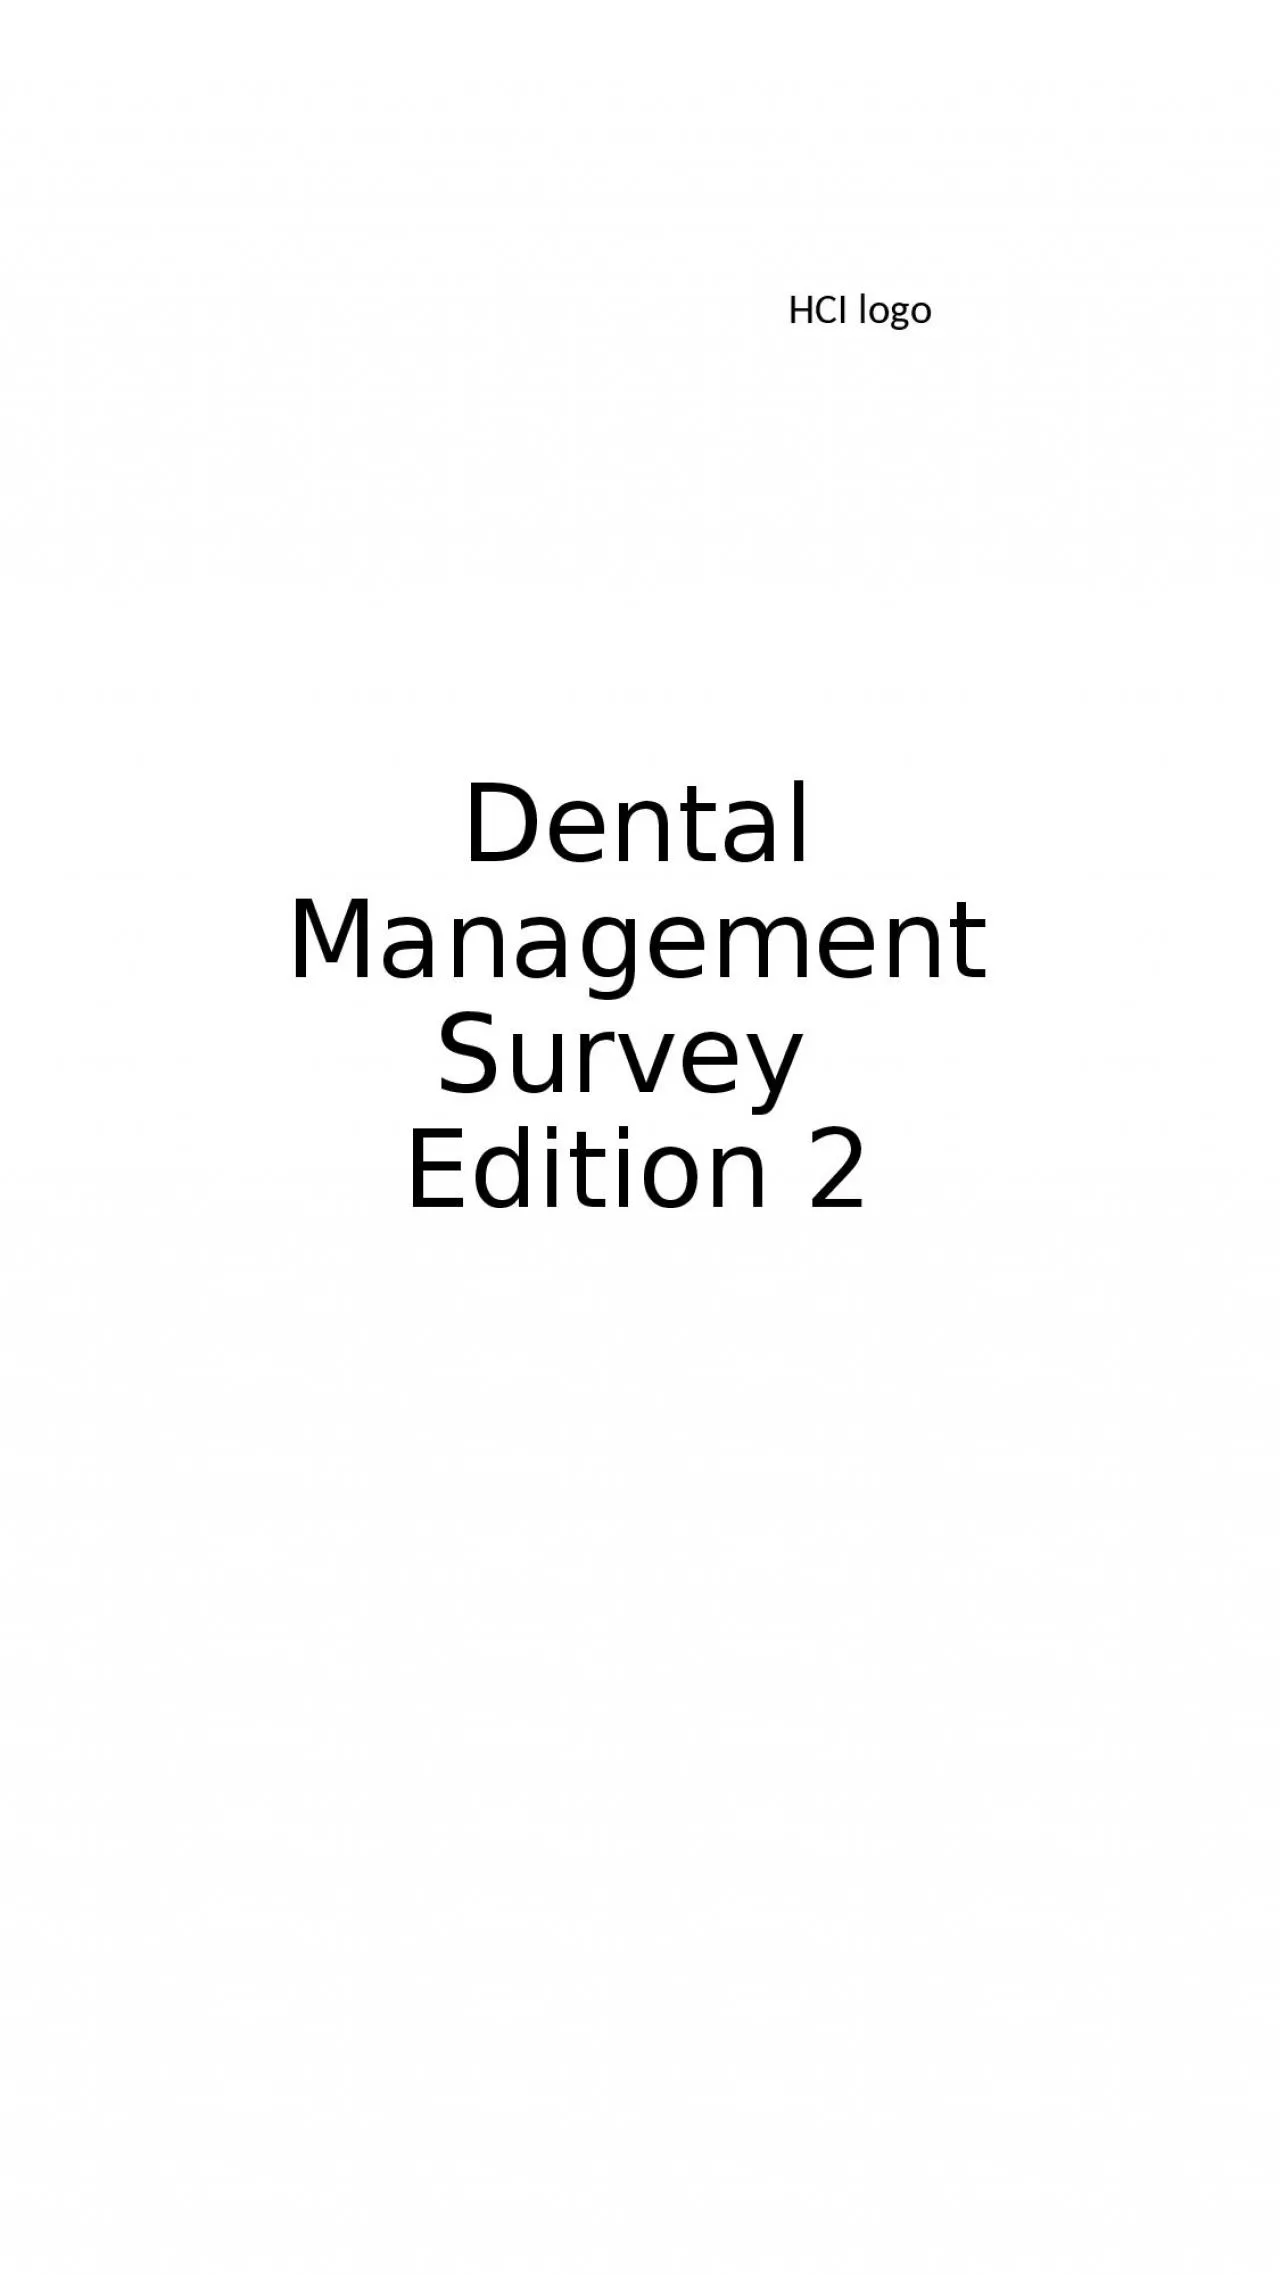 Dental Management Survey